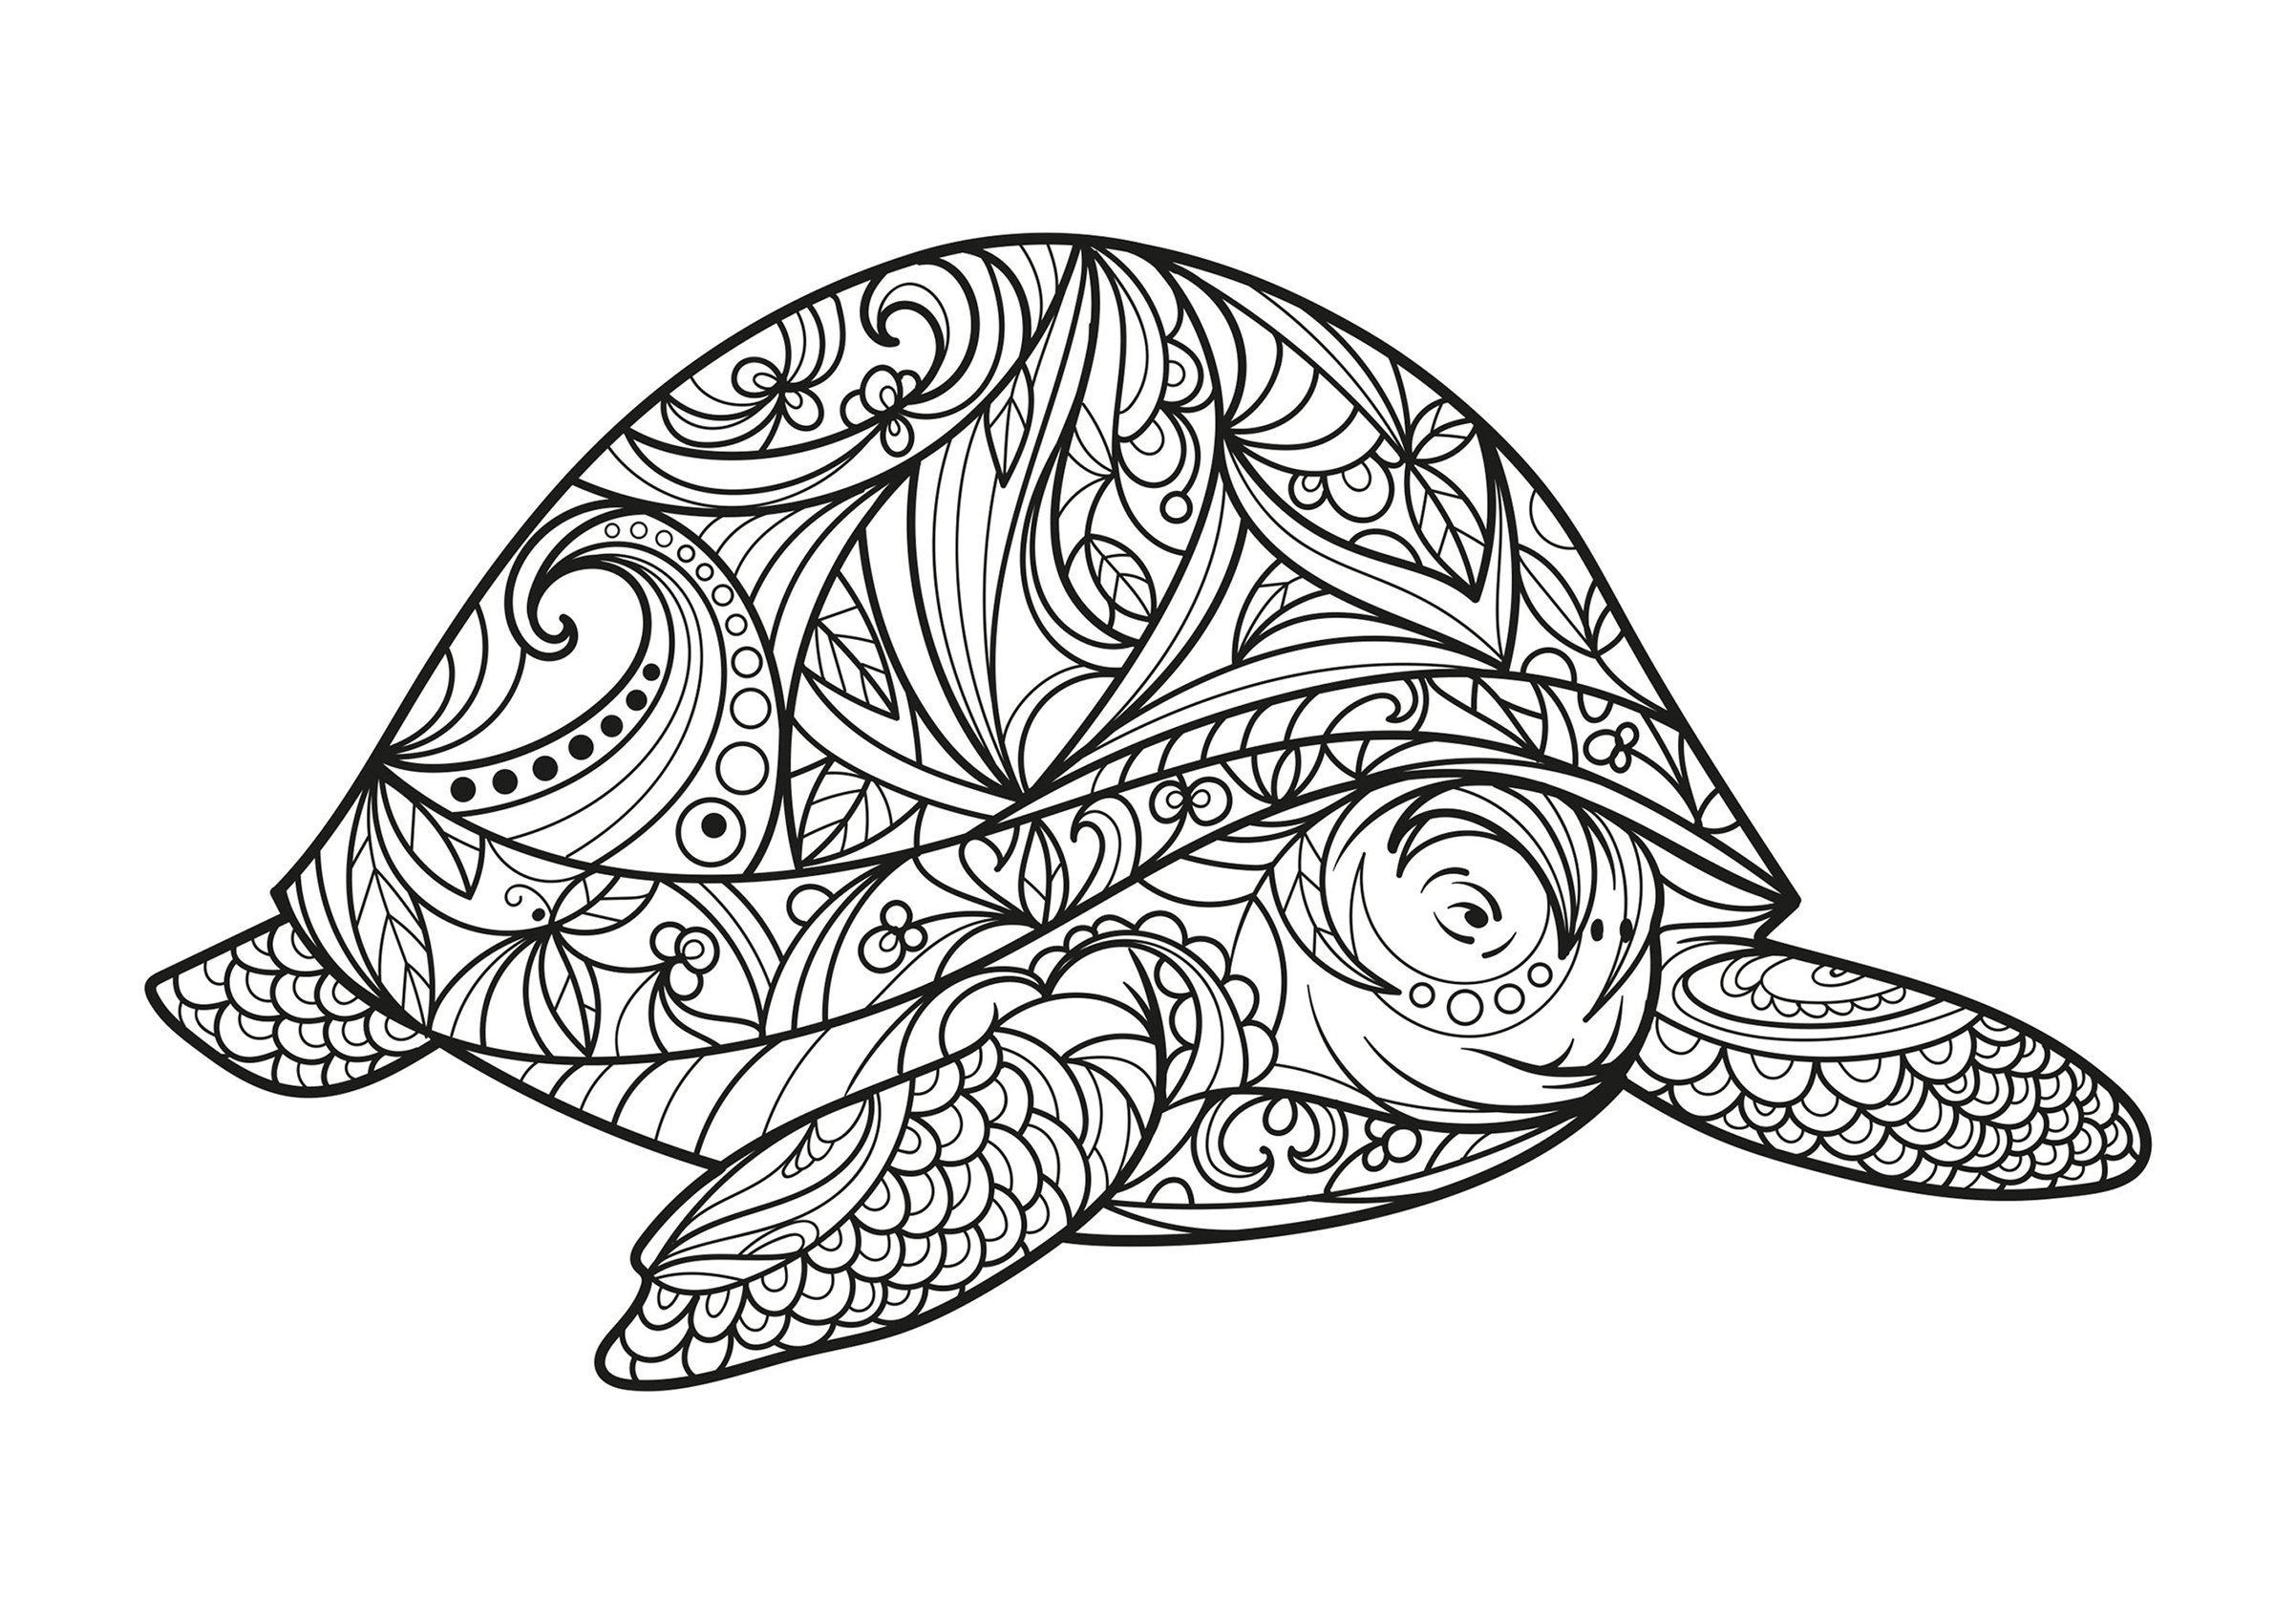 Tartaruga grande com padrões Zentangle, Fonte : 123rf   Artista : Alexpokusay